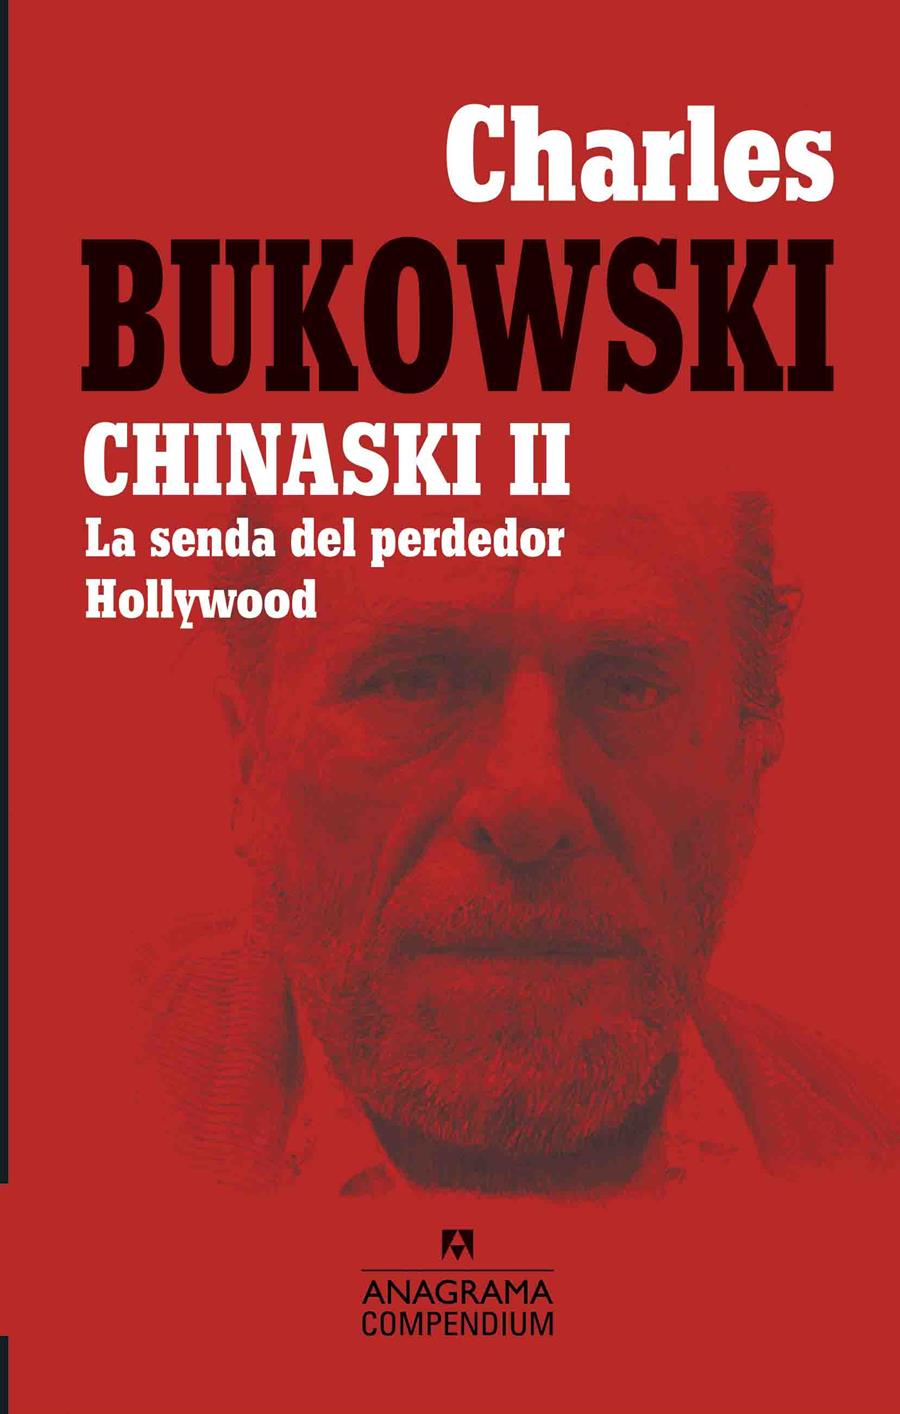 Chinaski II | Bukowski, Charles | Cooperativa autogestionària